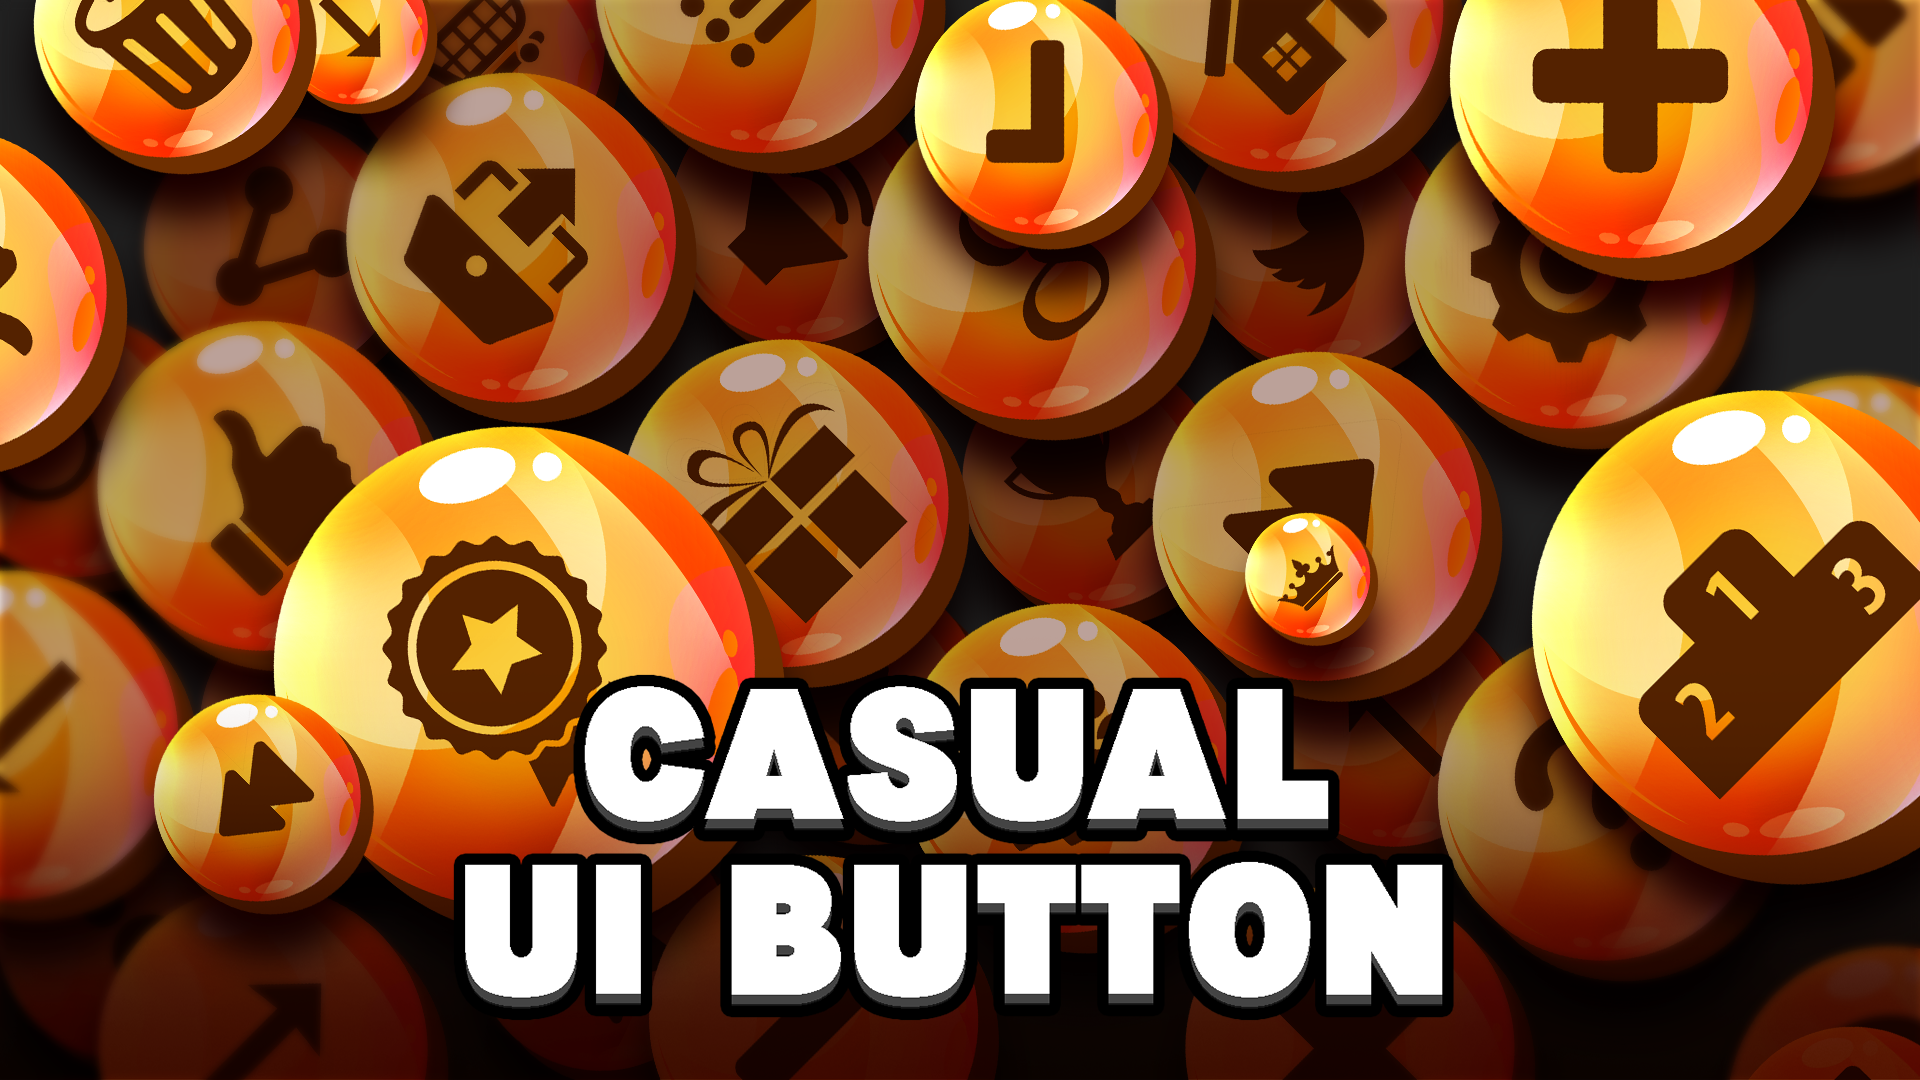 Casual UI Button #6